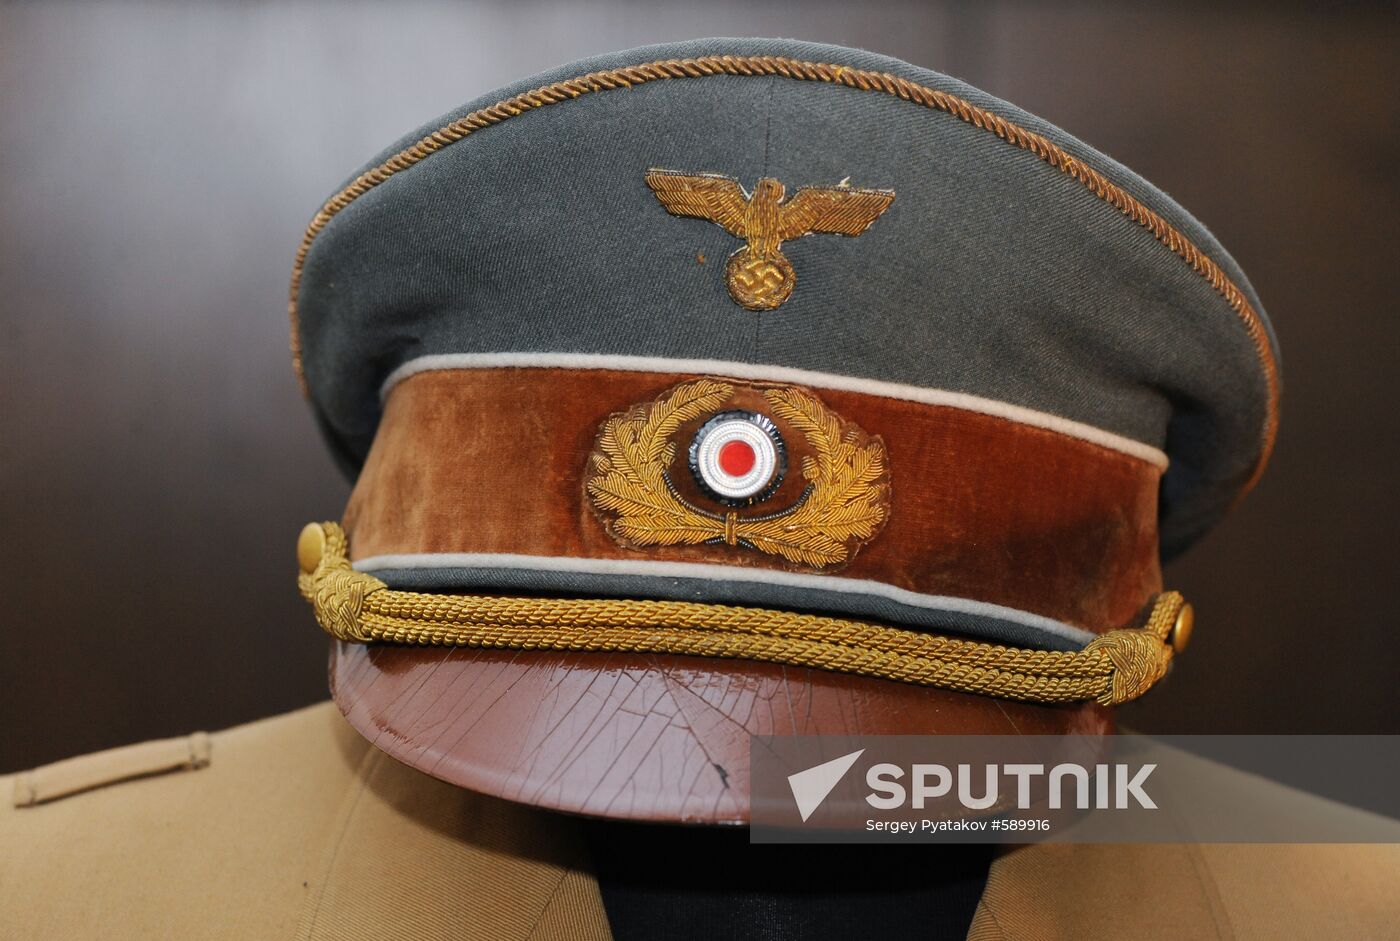 Adolf Hitler's cap